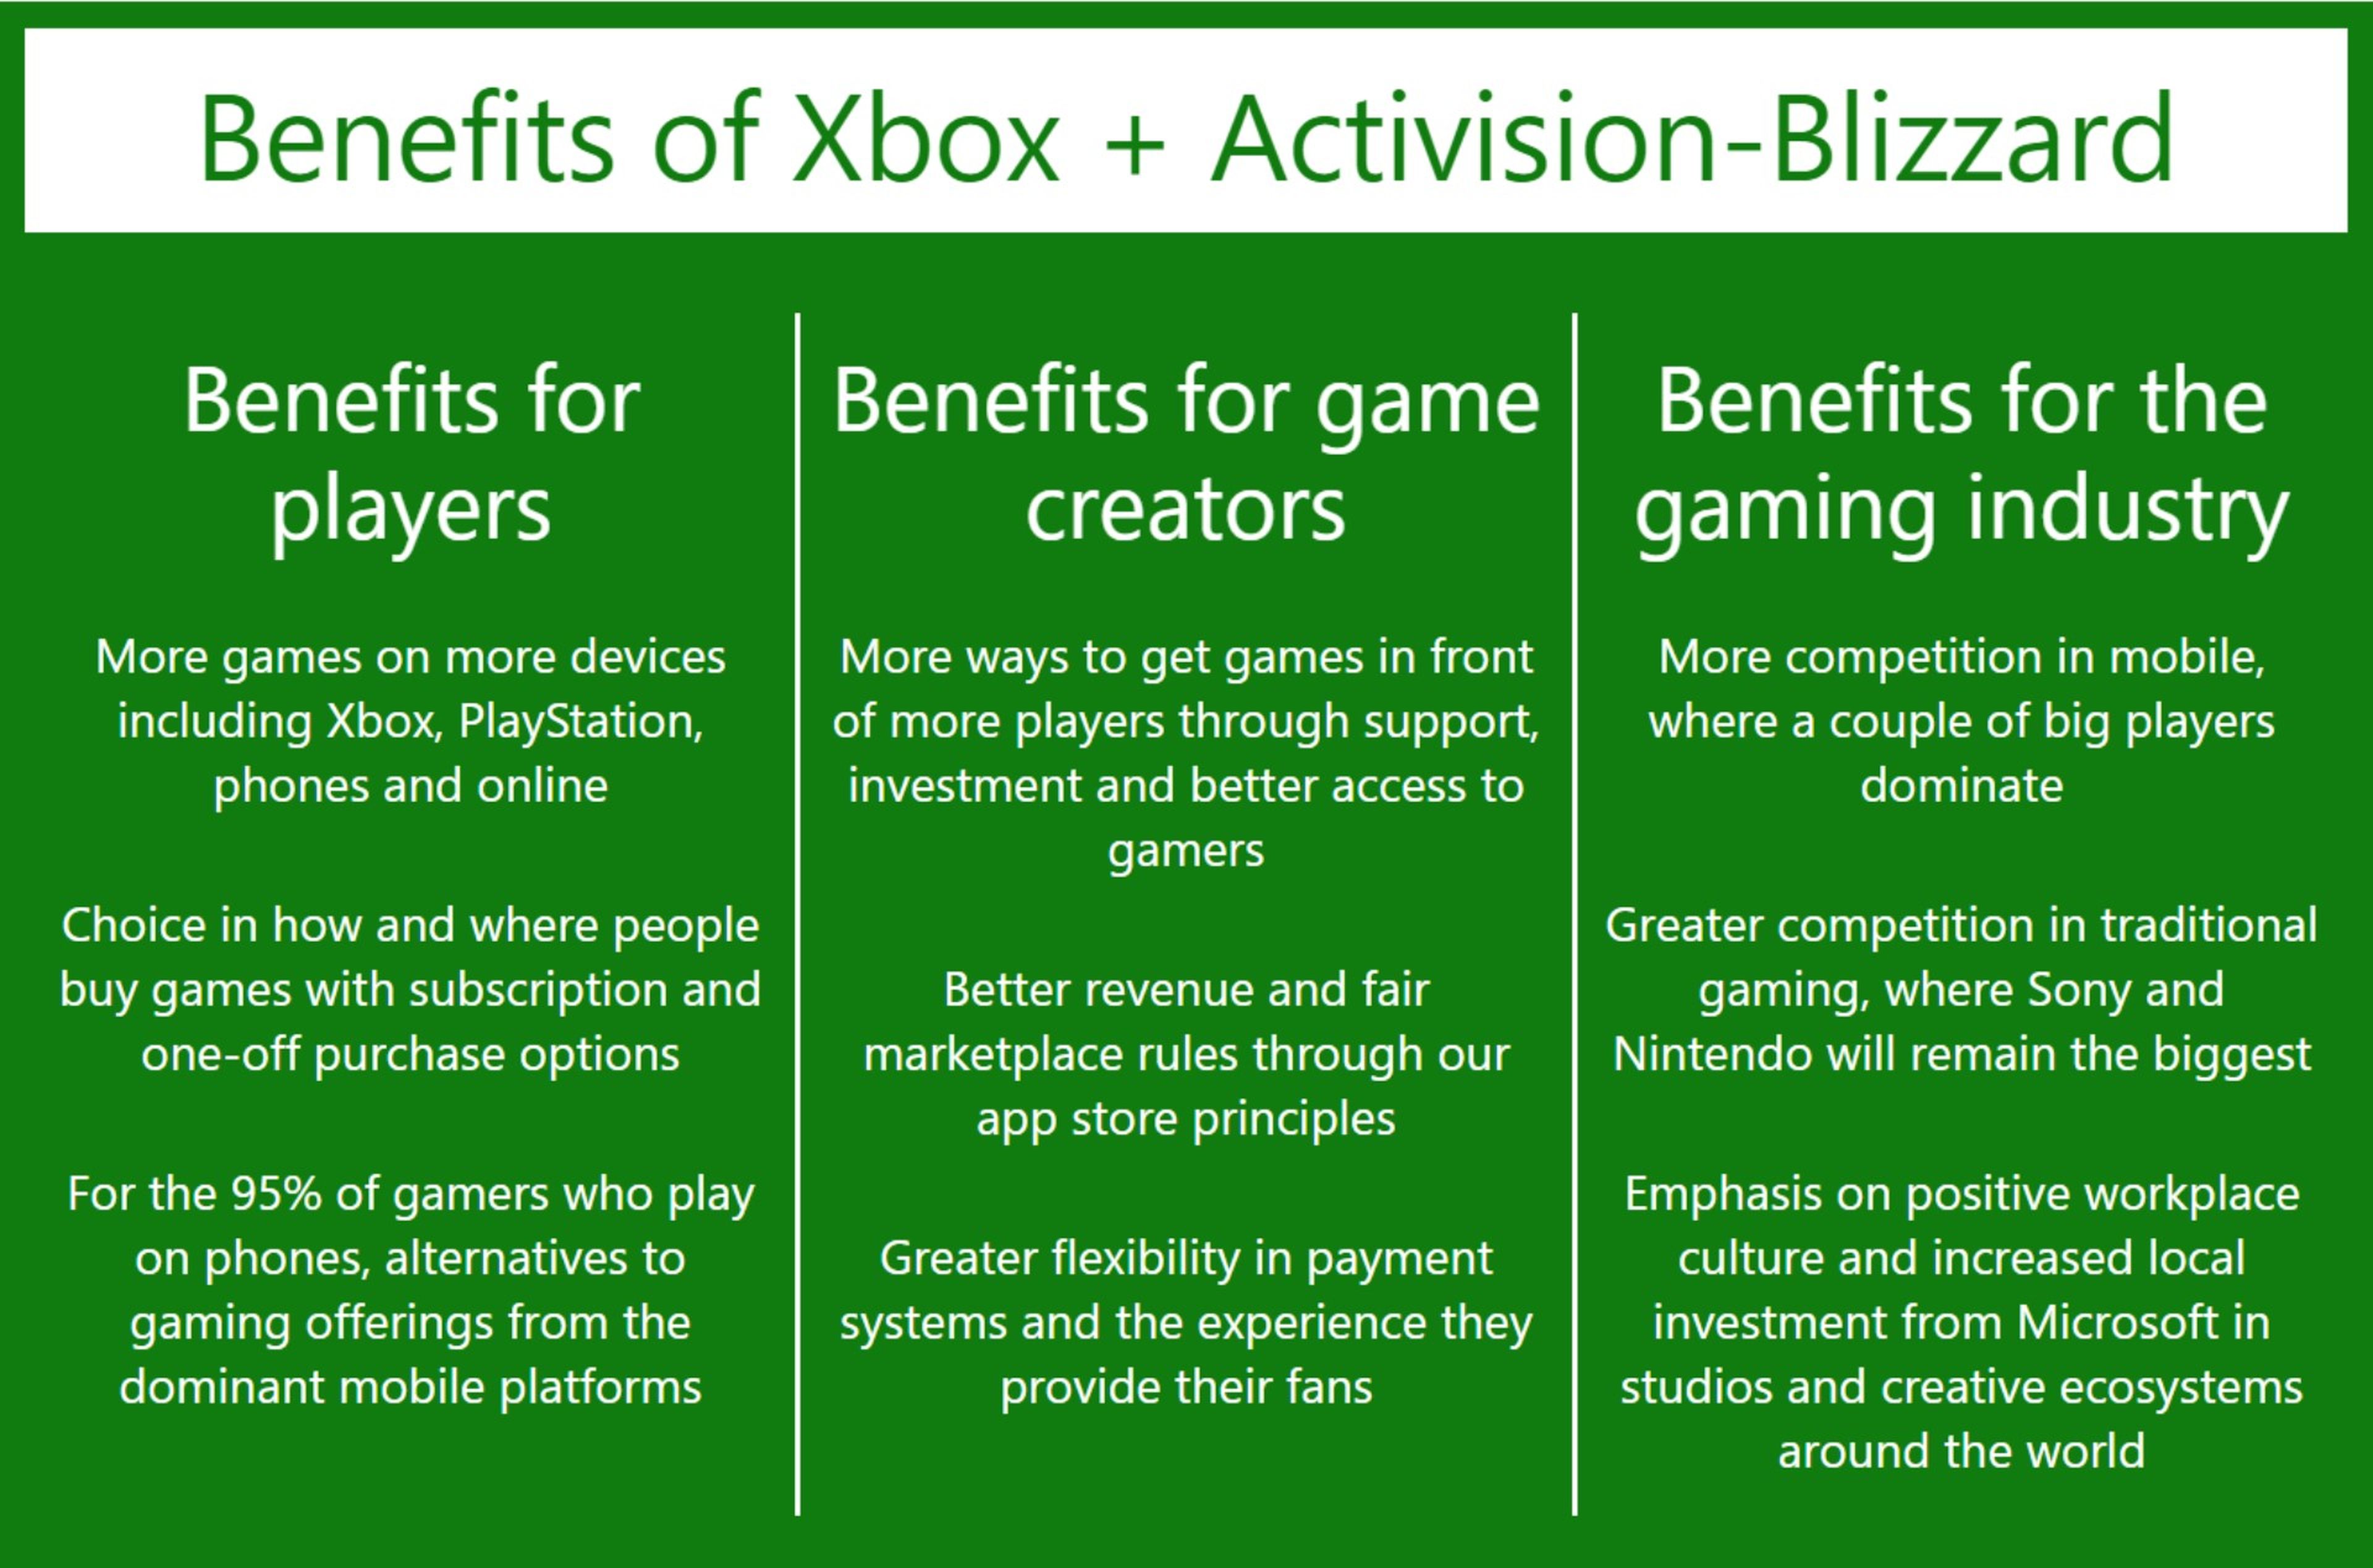 Xbox + Activision Blizzard